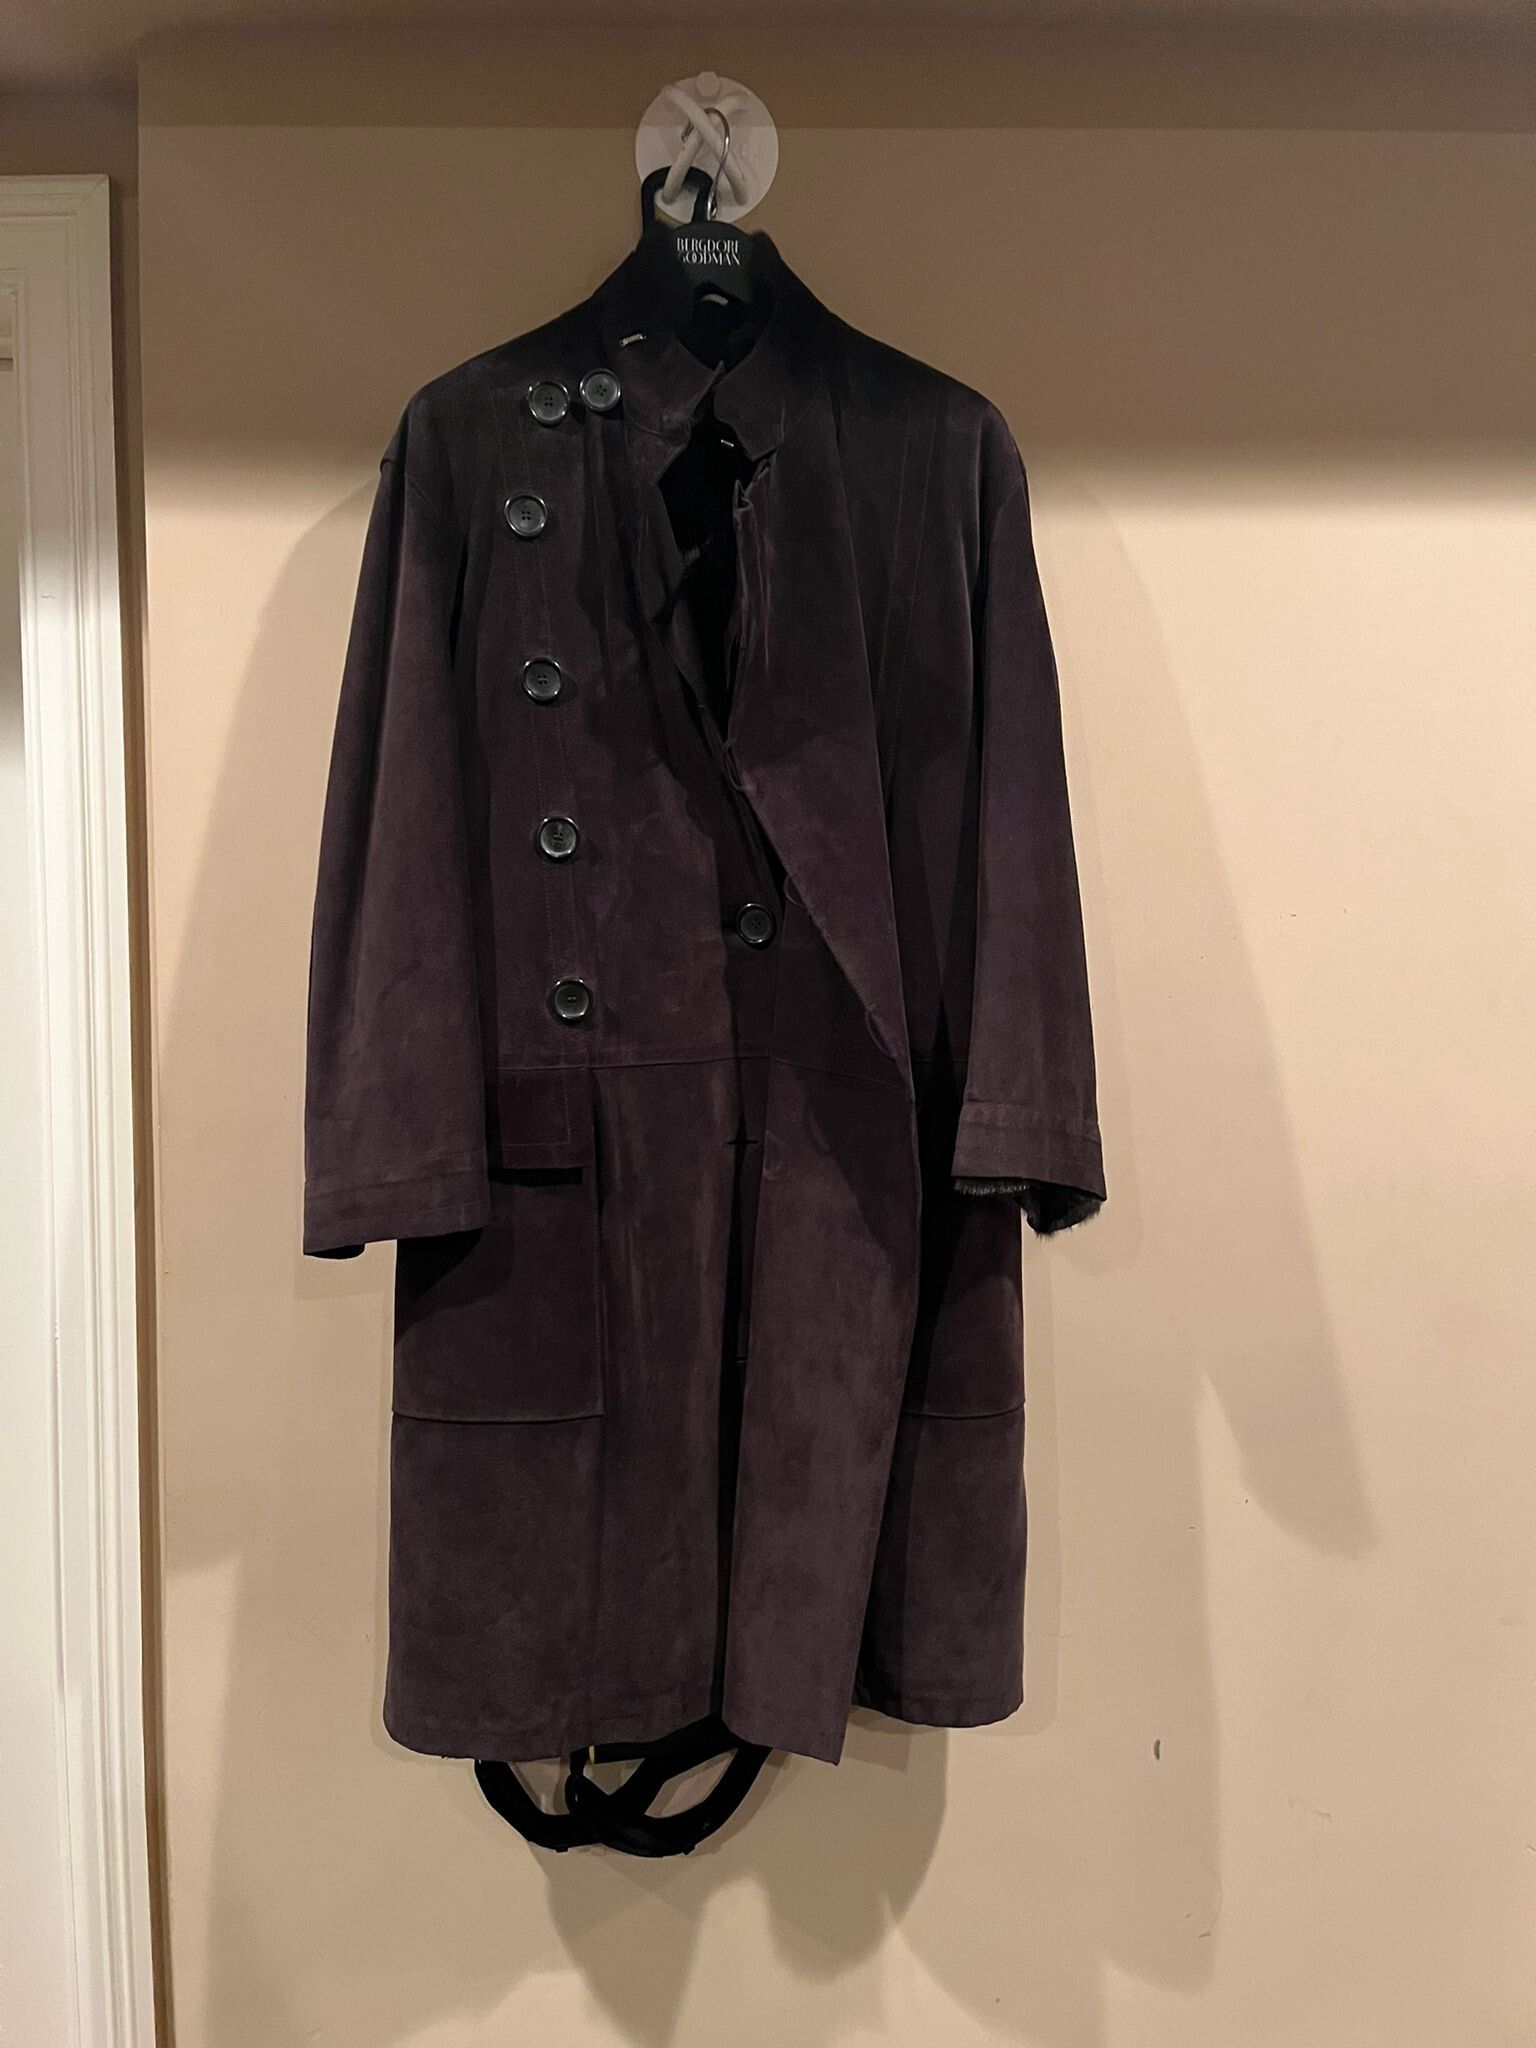 Gucci Long Coat in Dark Brown Size US M / EU 48-50 / 2 - 1 Preview